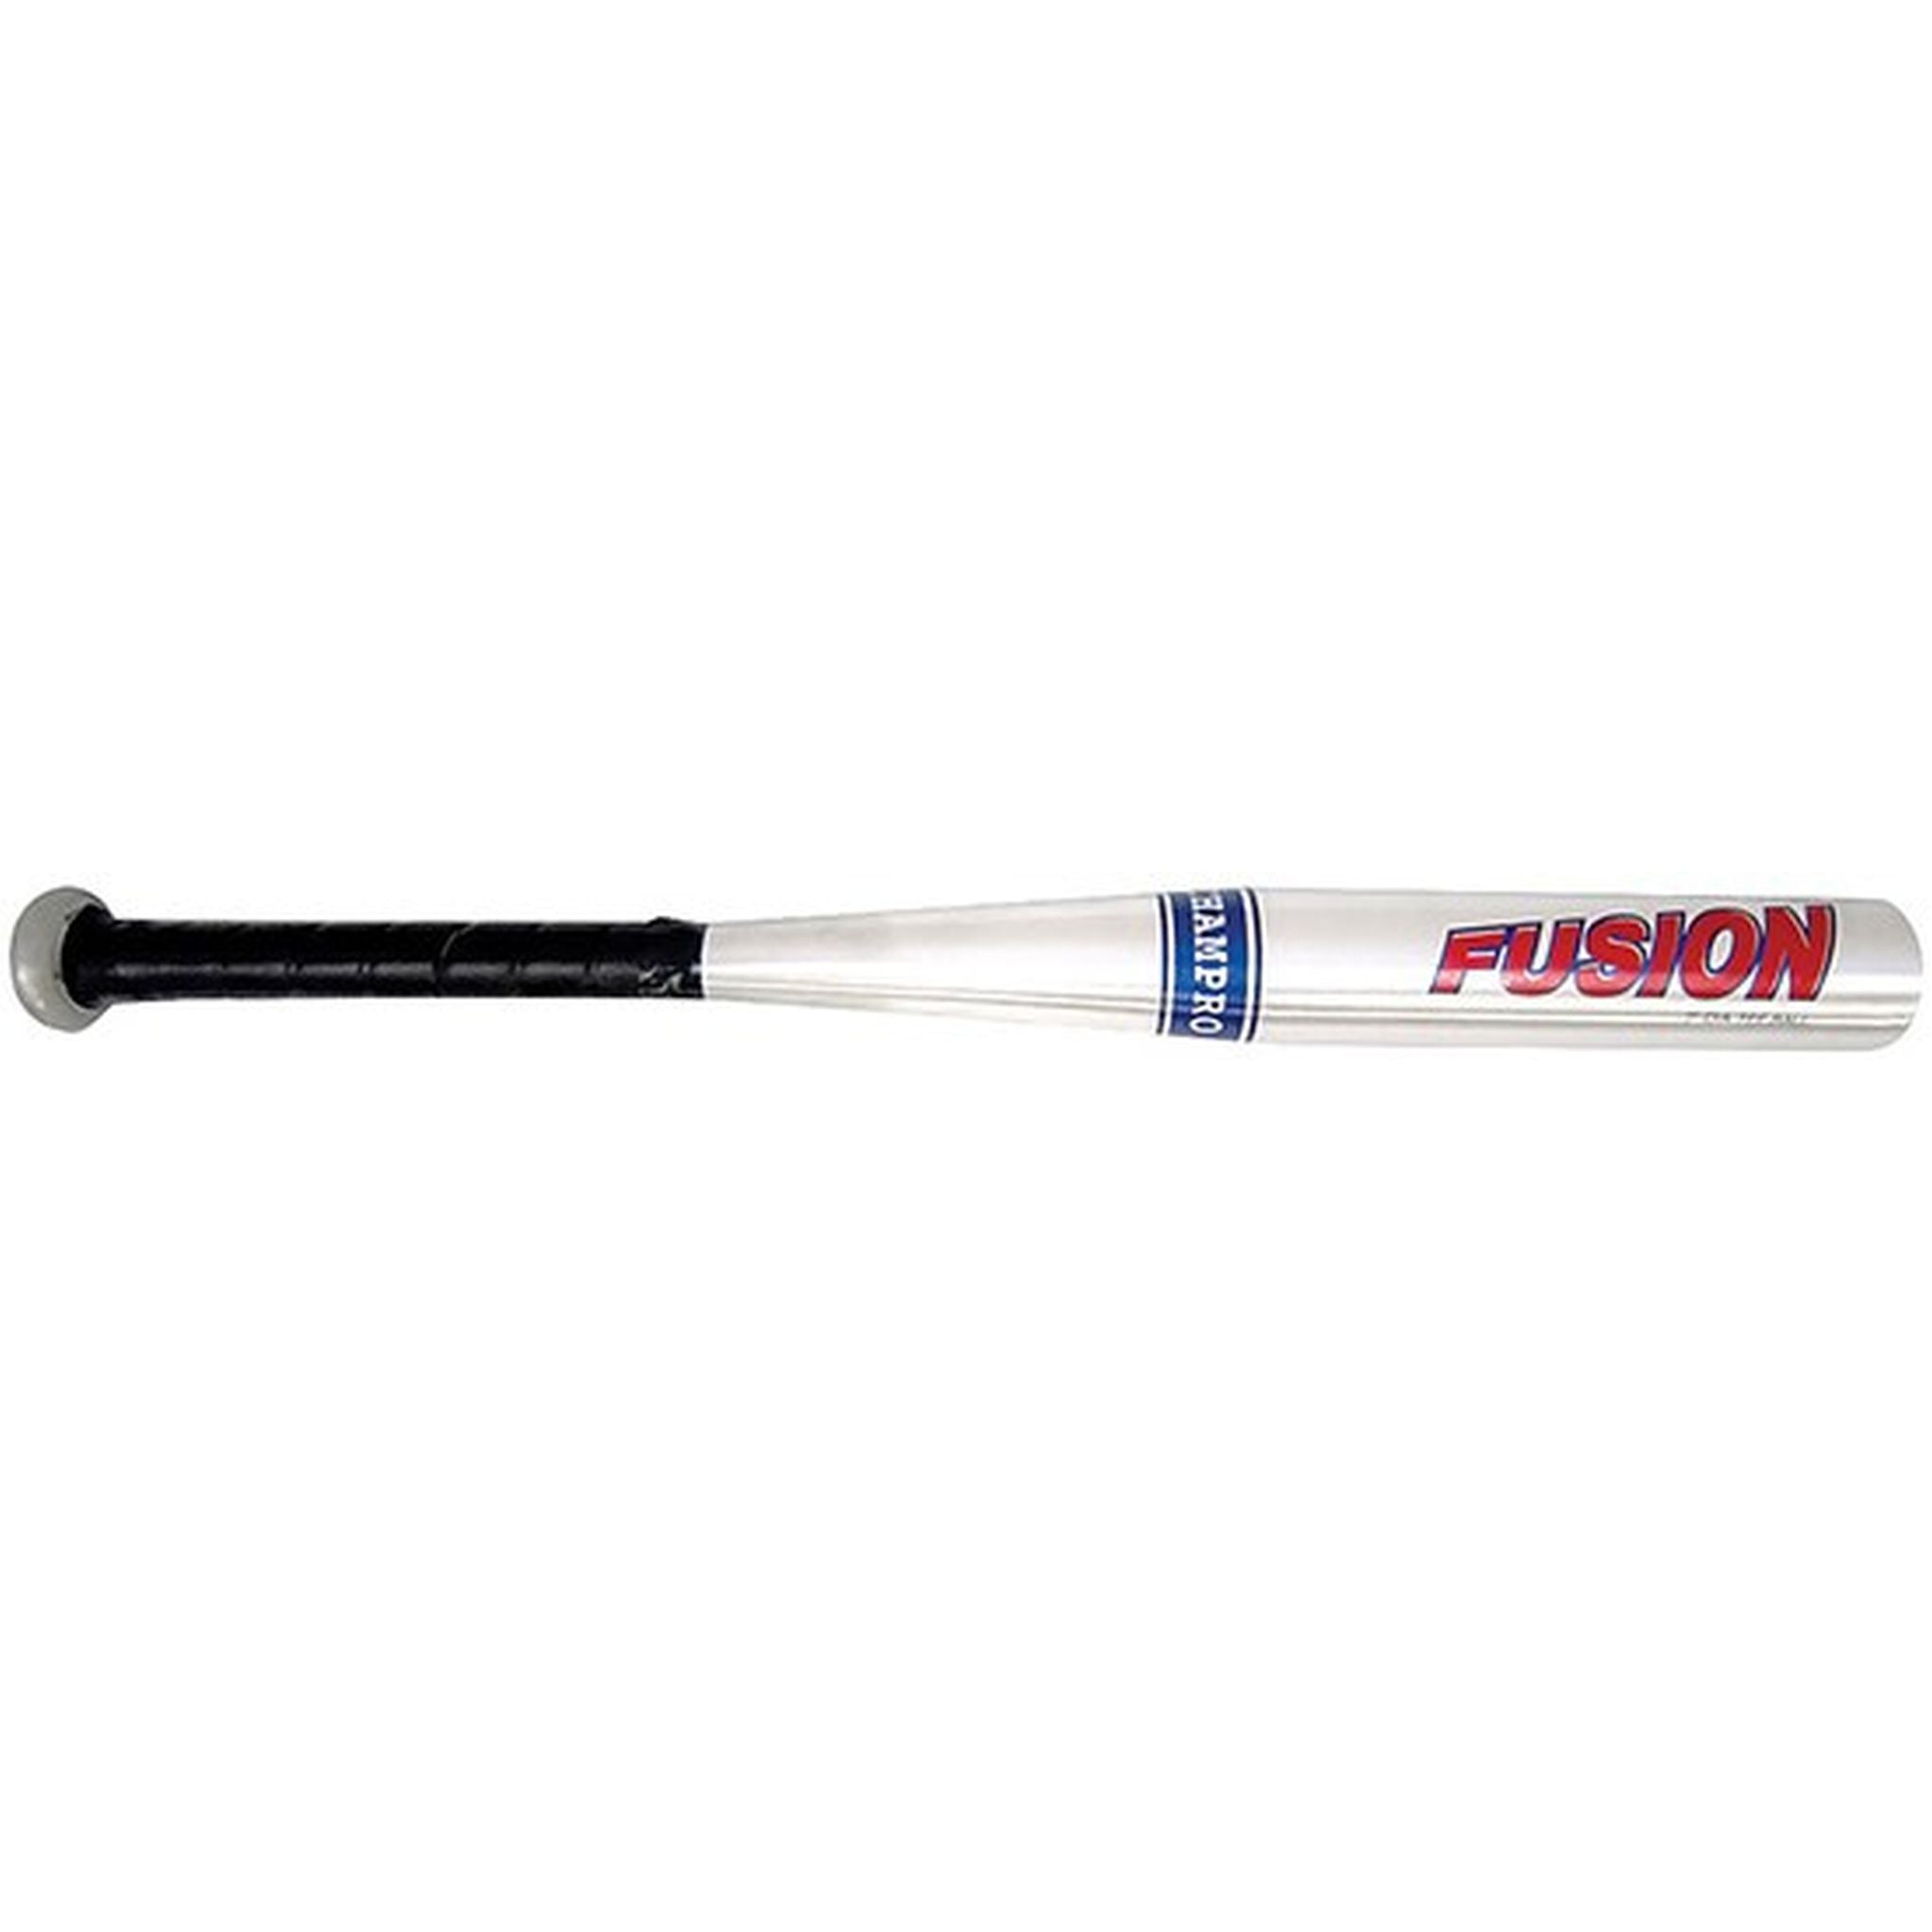 CHAMPRO Alloy Fusion 28-inch Teeball Bat